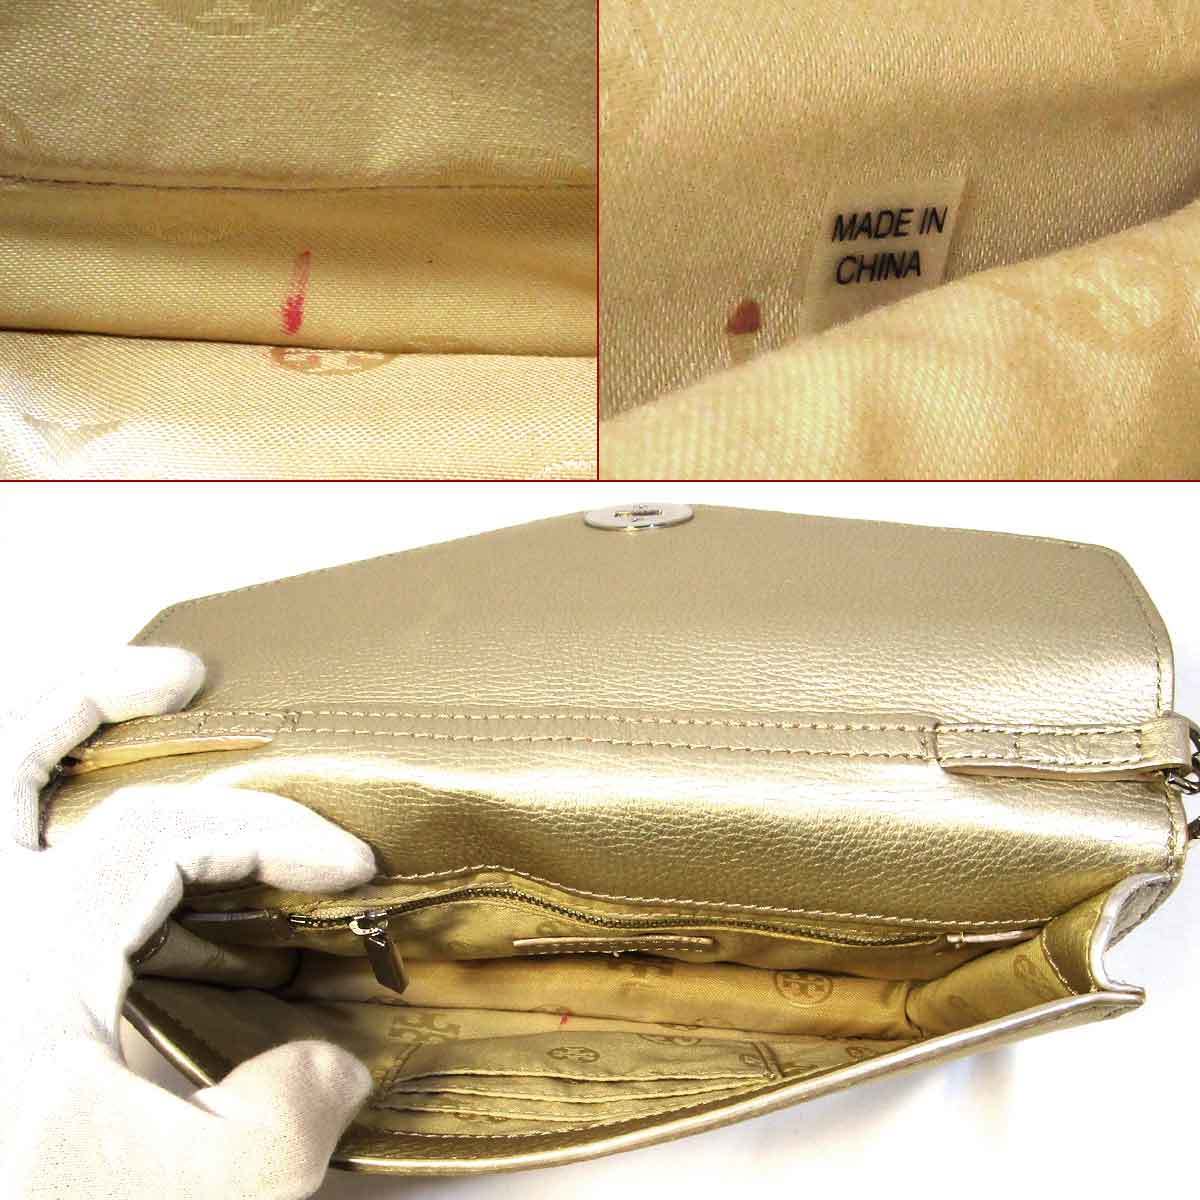  Tory Burch сумка на плечо цепь бумажник оттенок золота б/у комплектация :AB солнечный ya ломбард 